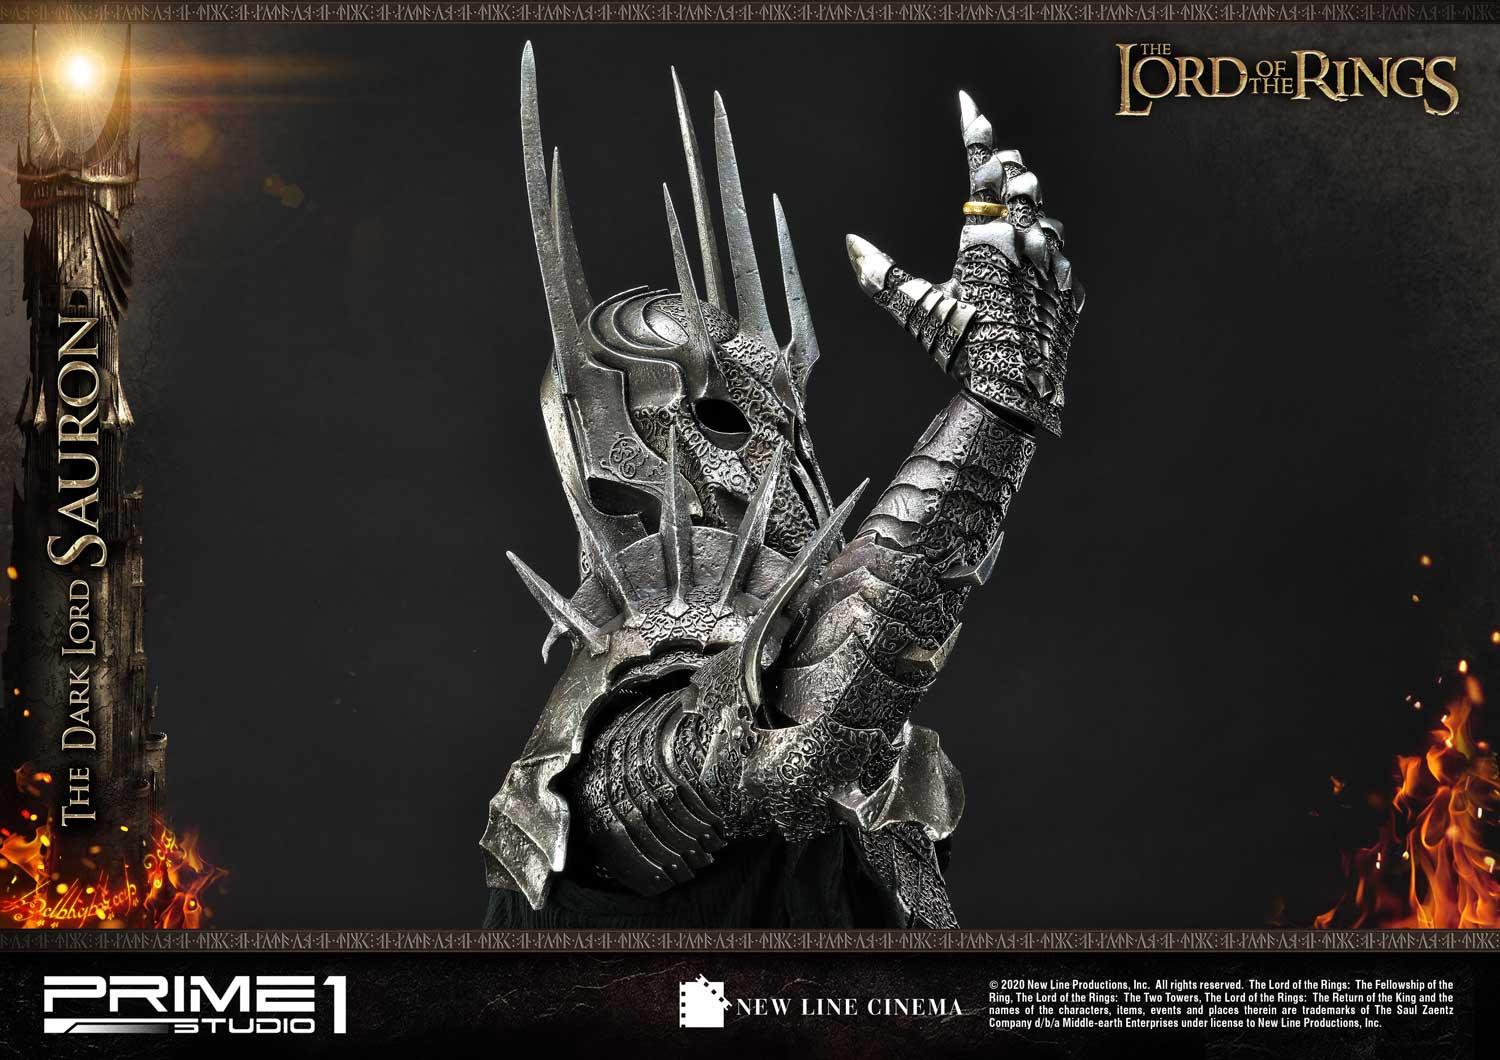 Original WETA Classic Collection The Dark Lord Sauron 1/6Full body